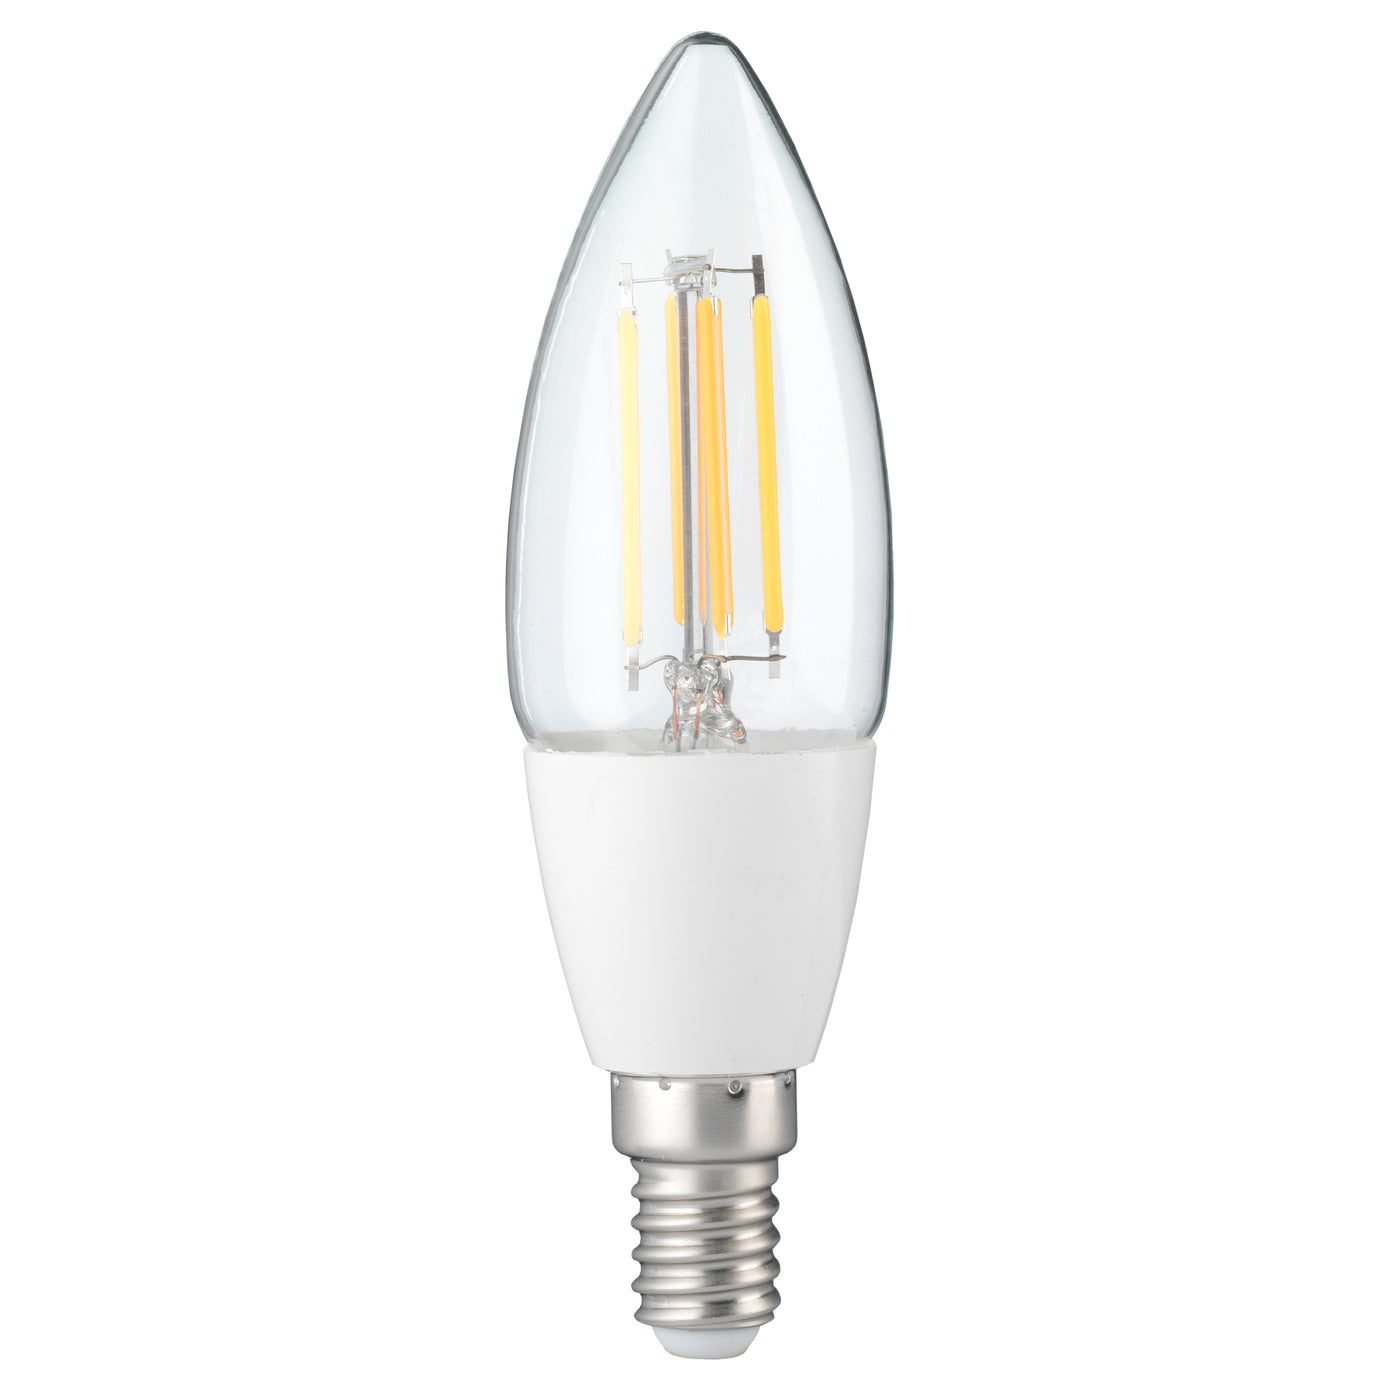 Alecto SMARTLIGHT130 - Smart filament LED lamp with Wi-Fi